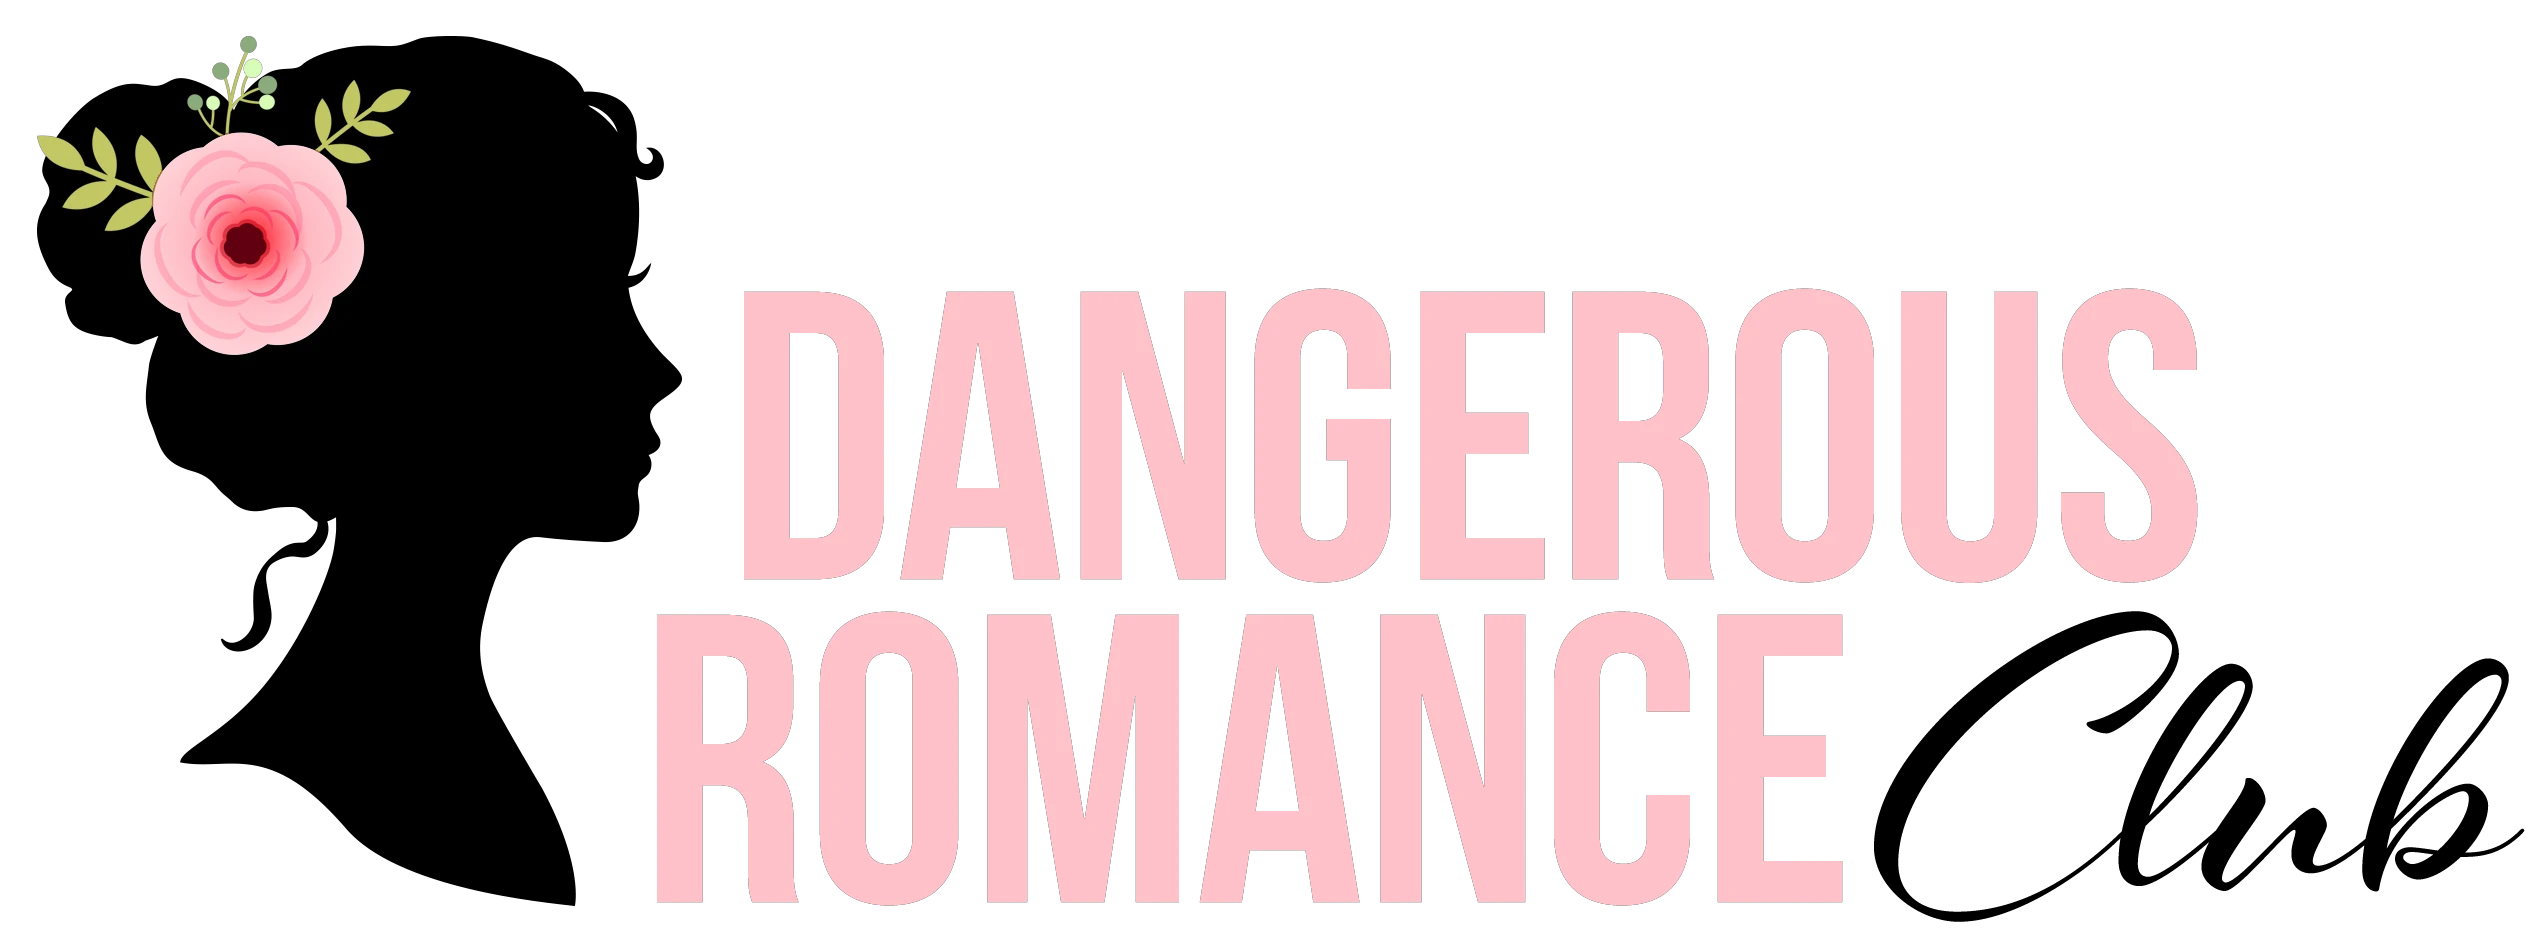 Dangerous Romance Club